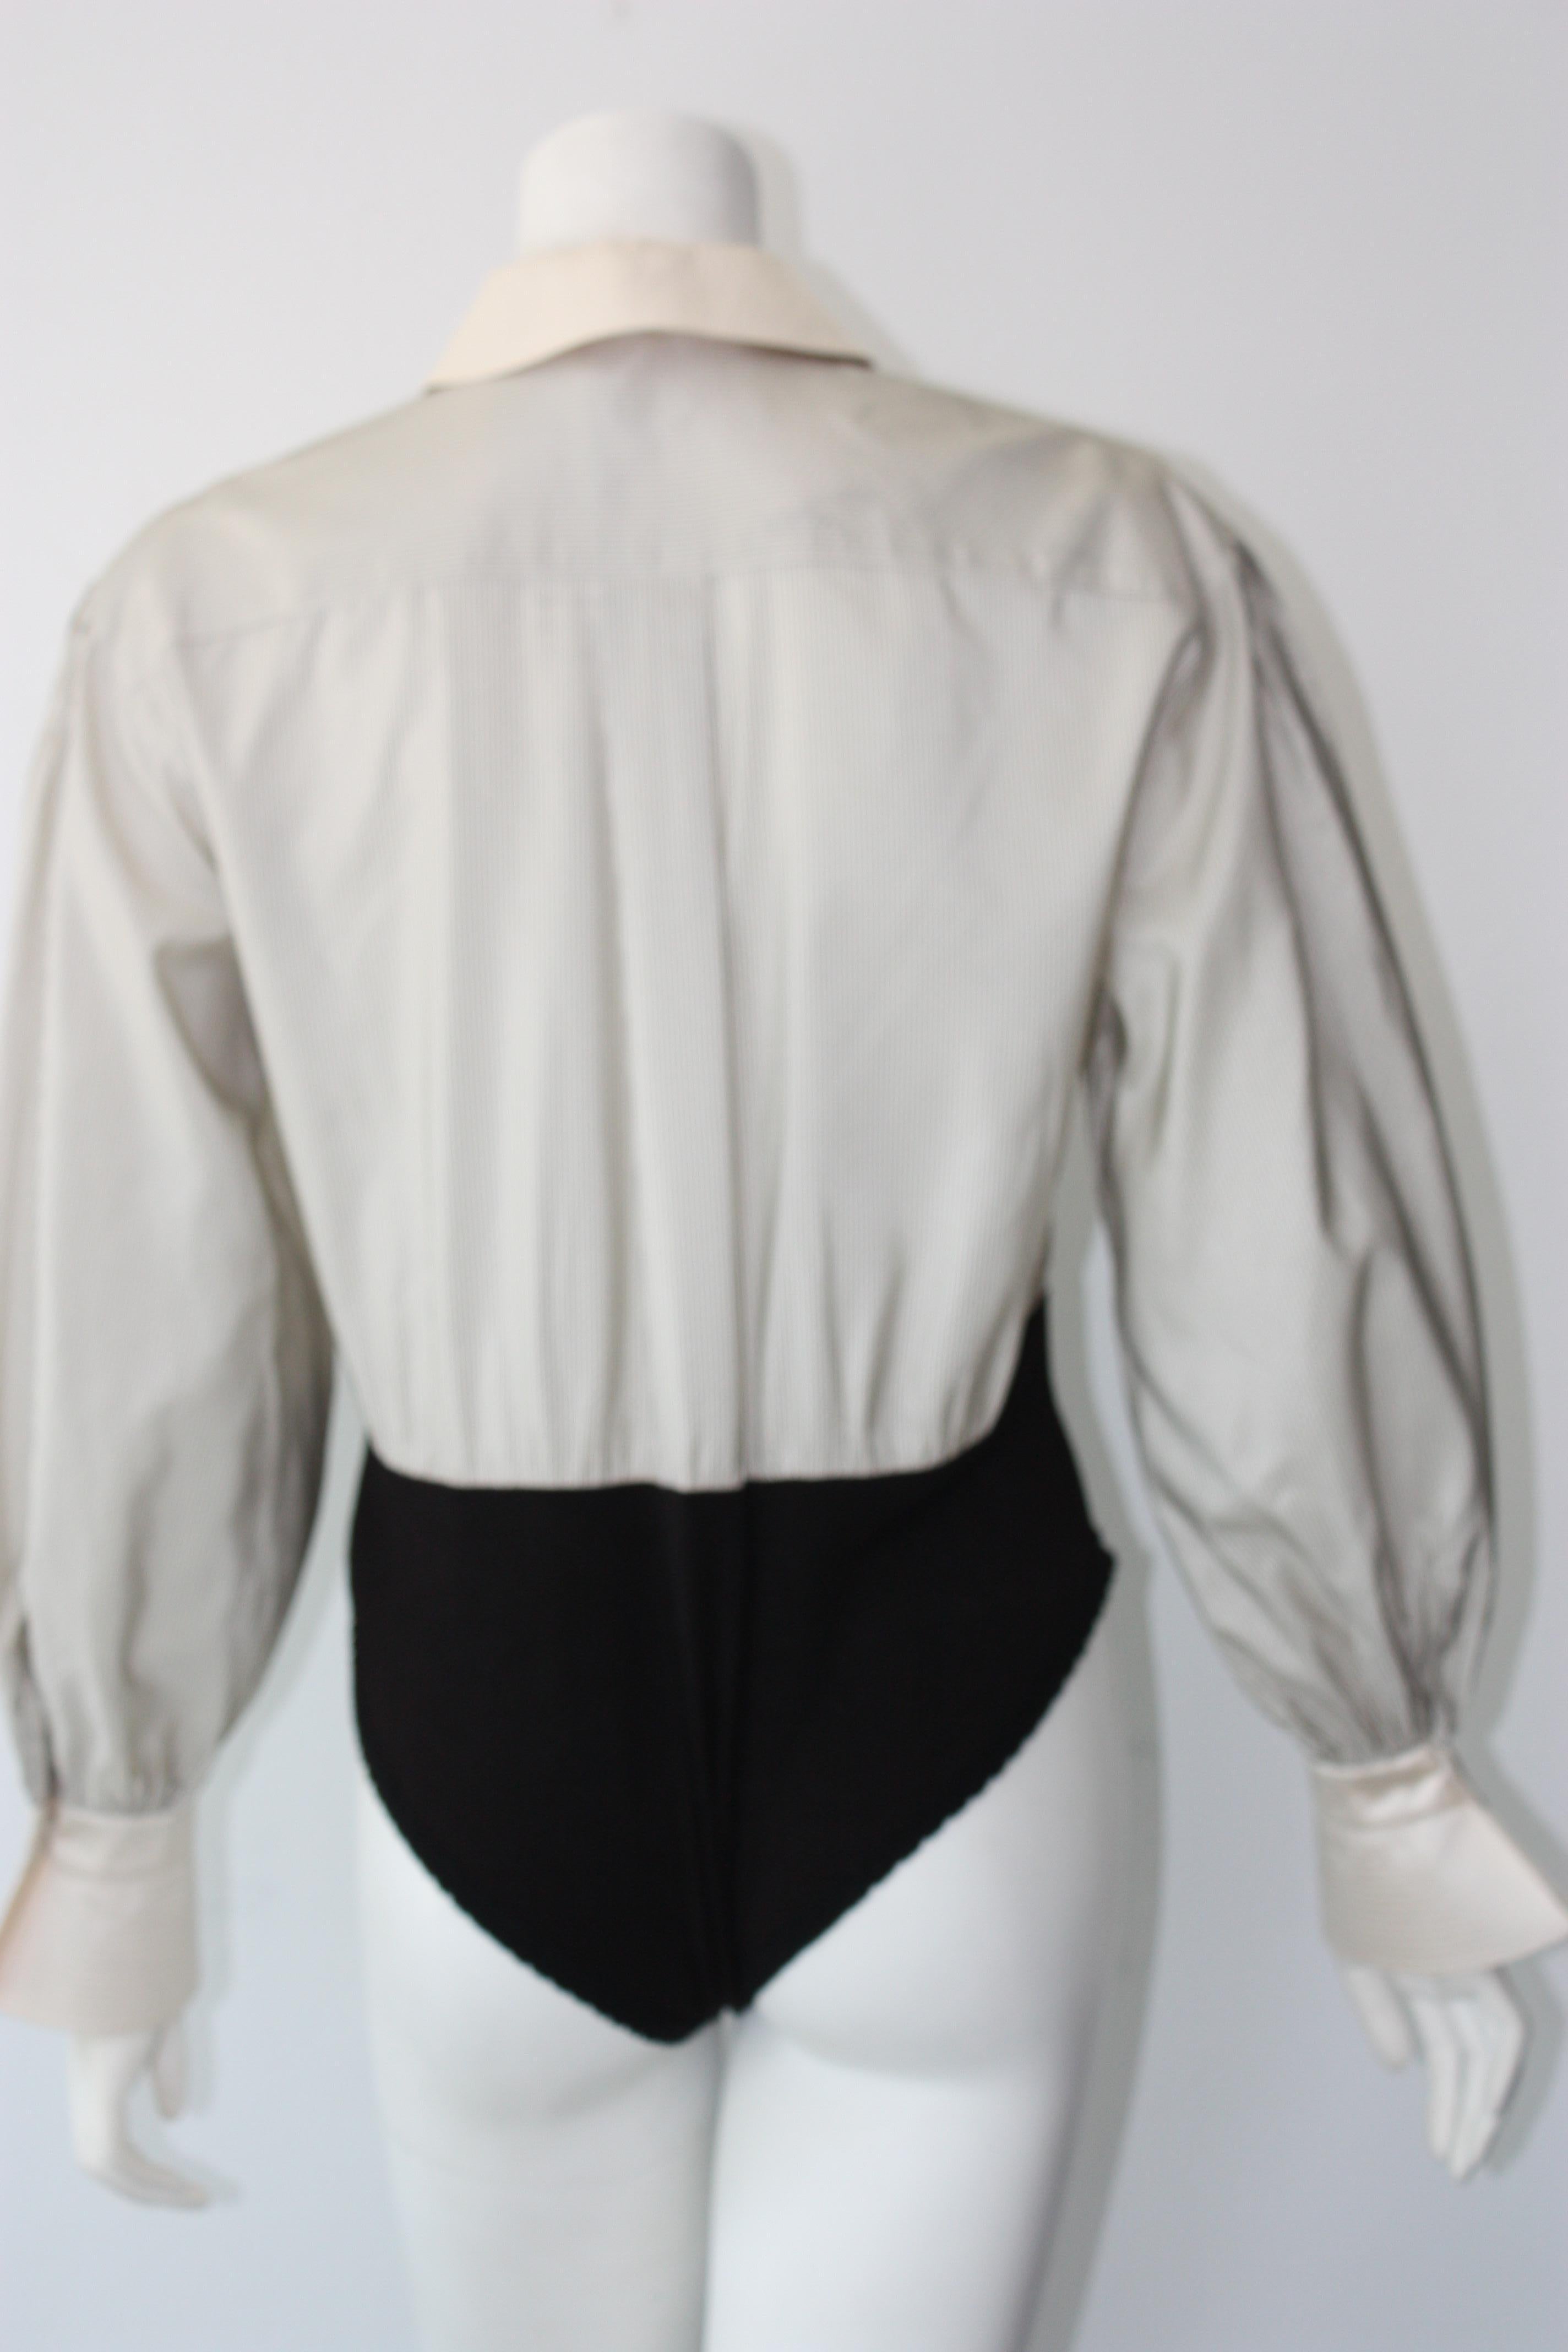 90s Vintage Escada Black and Cream Tuxedo Body Suit size Small  8